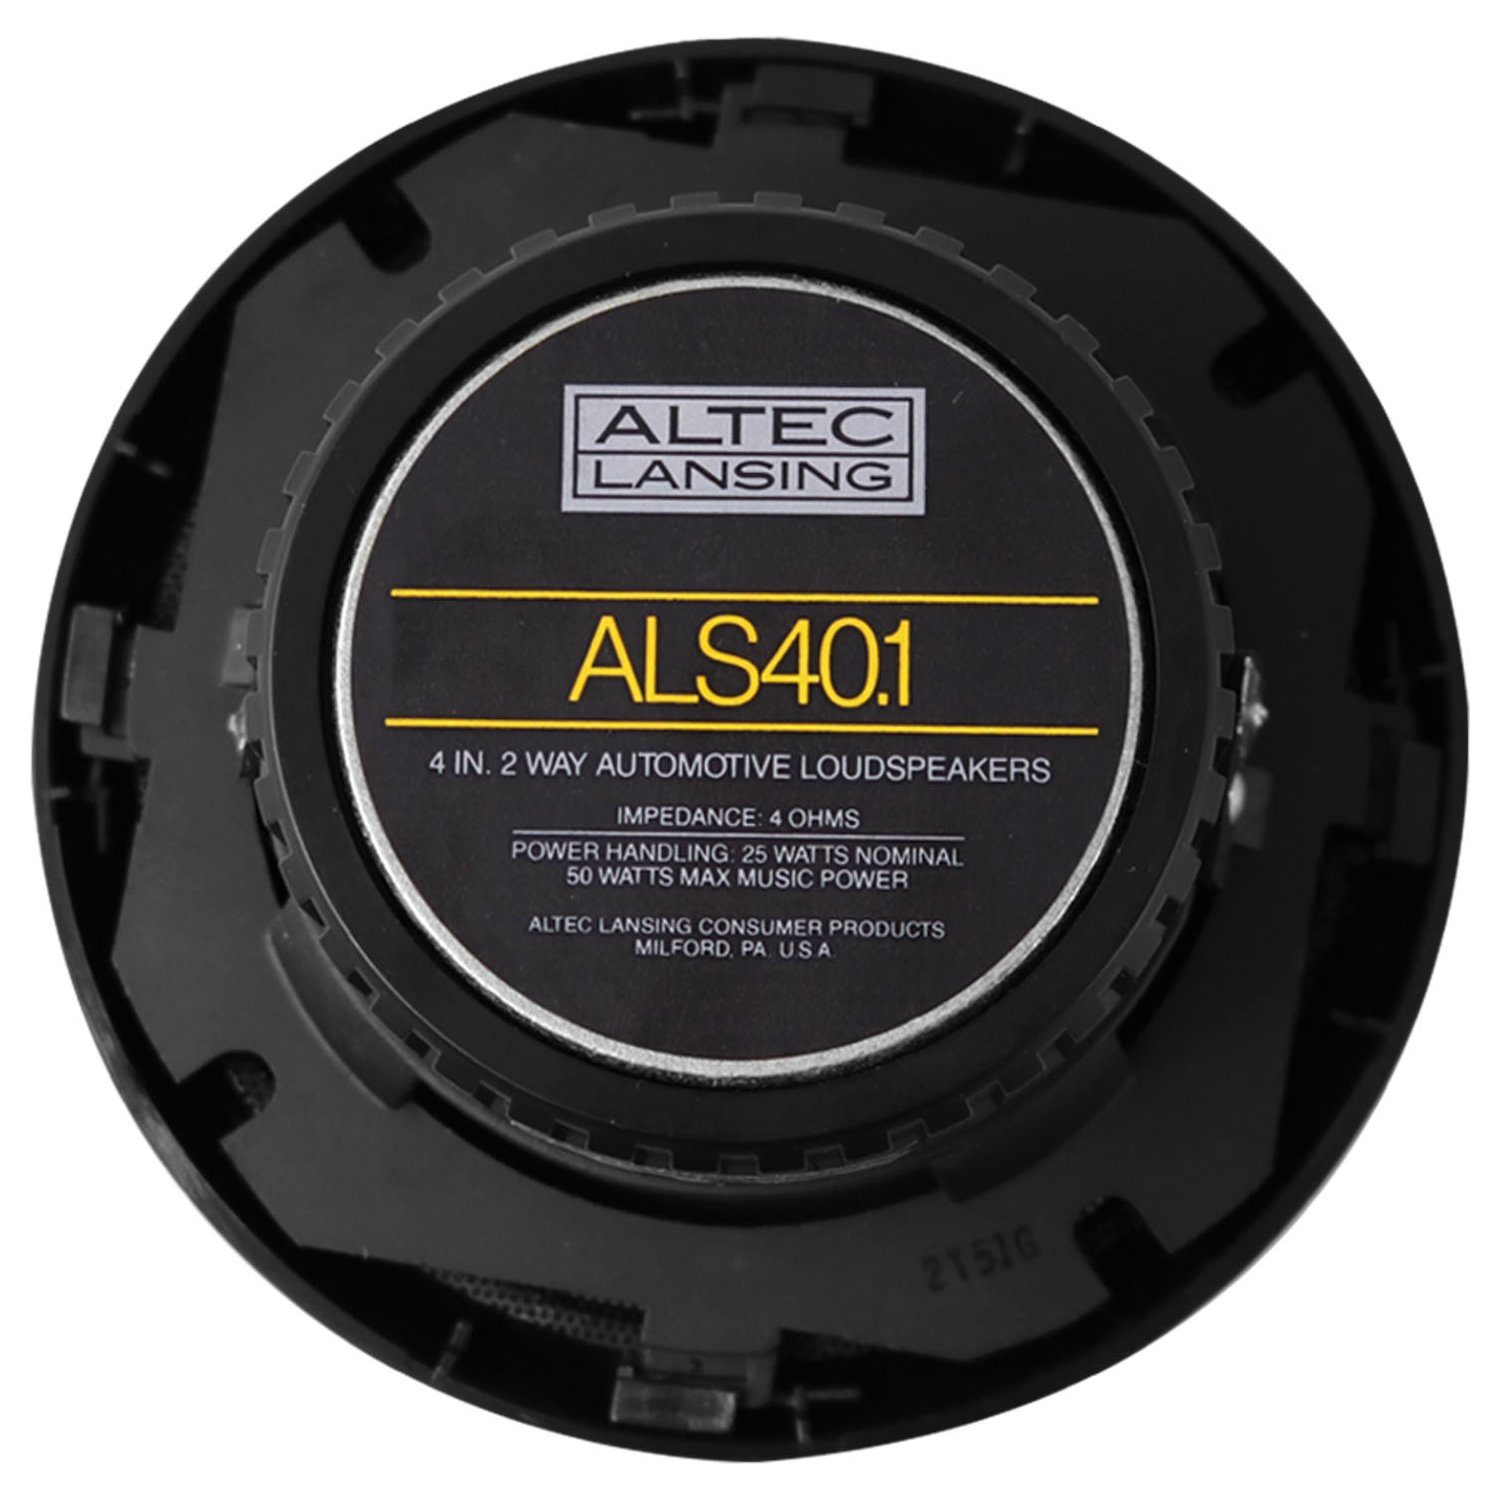 Altec - ALS-40.1 schwarz Lautsprecher - Auto-Lautsprecher Lansing 2-Wege